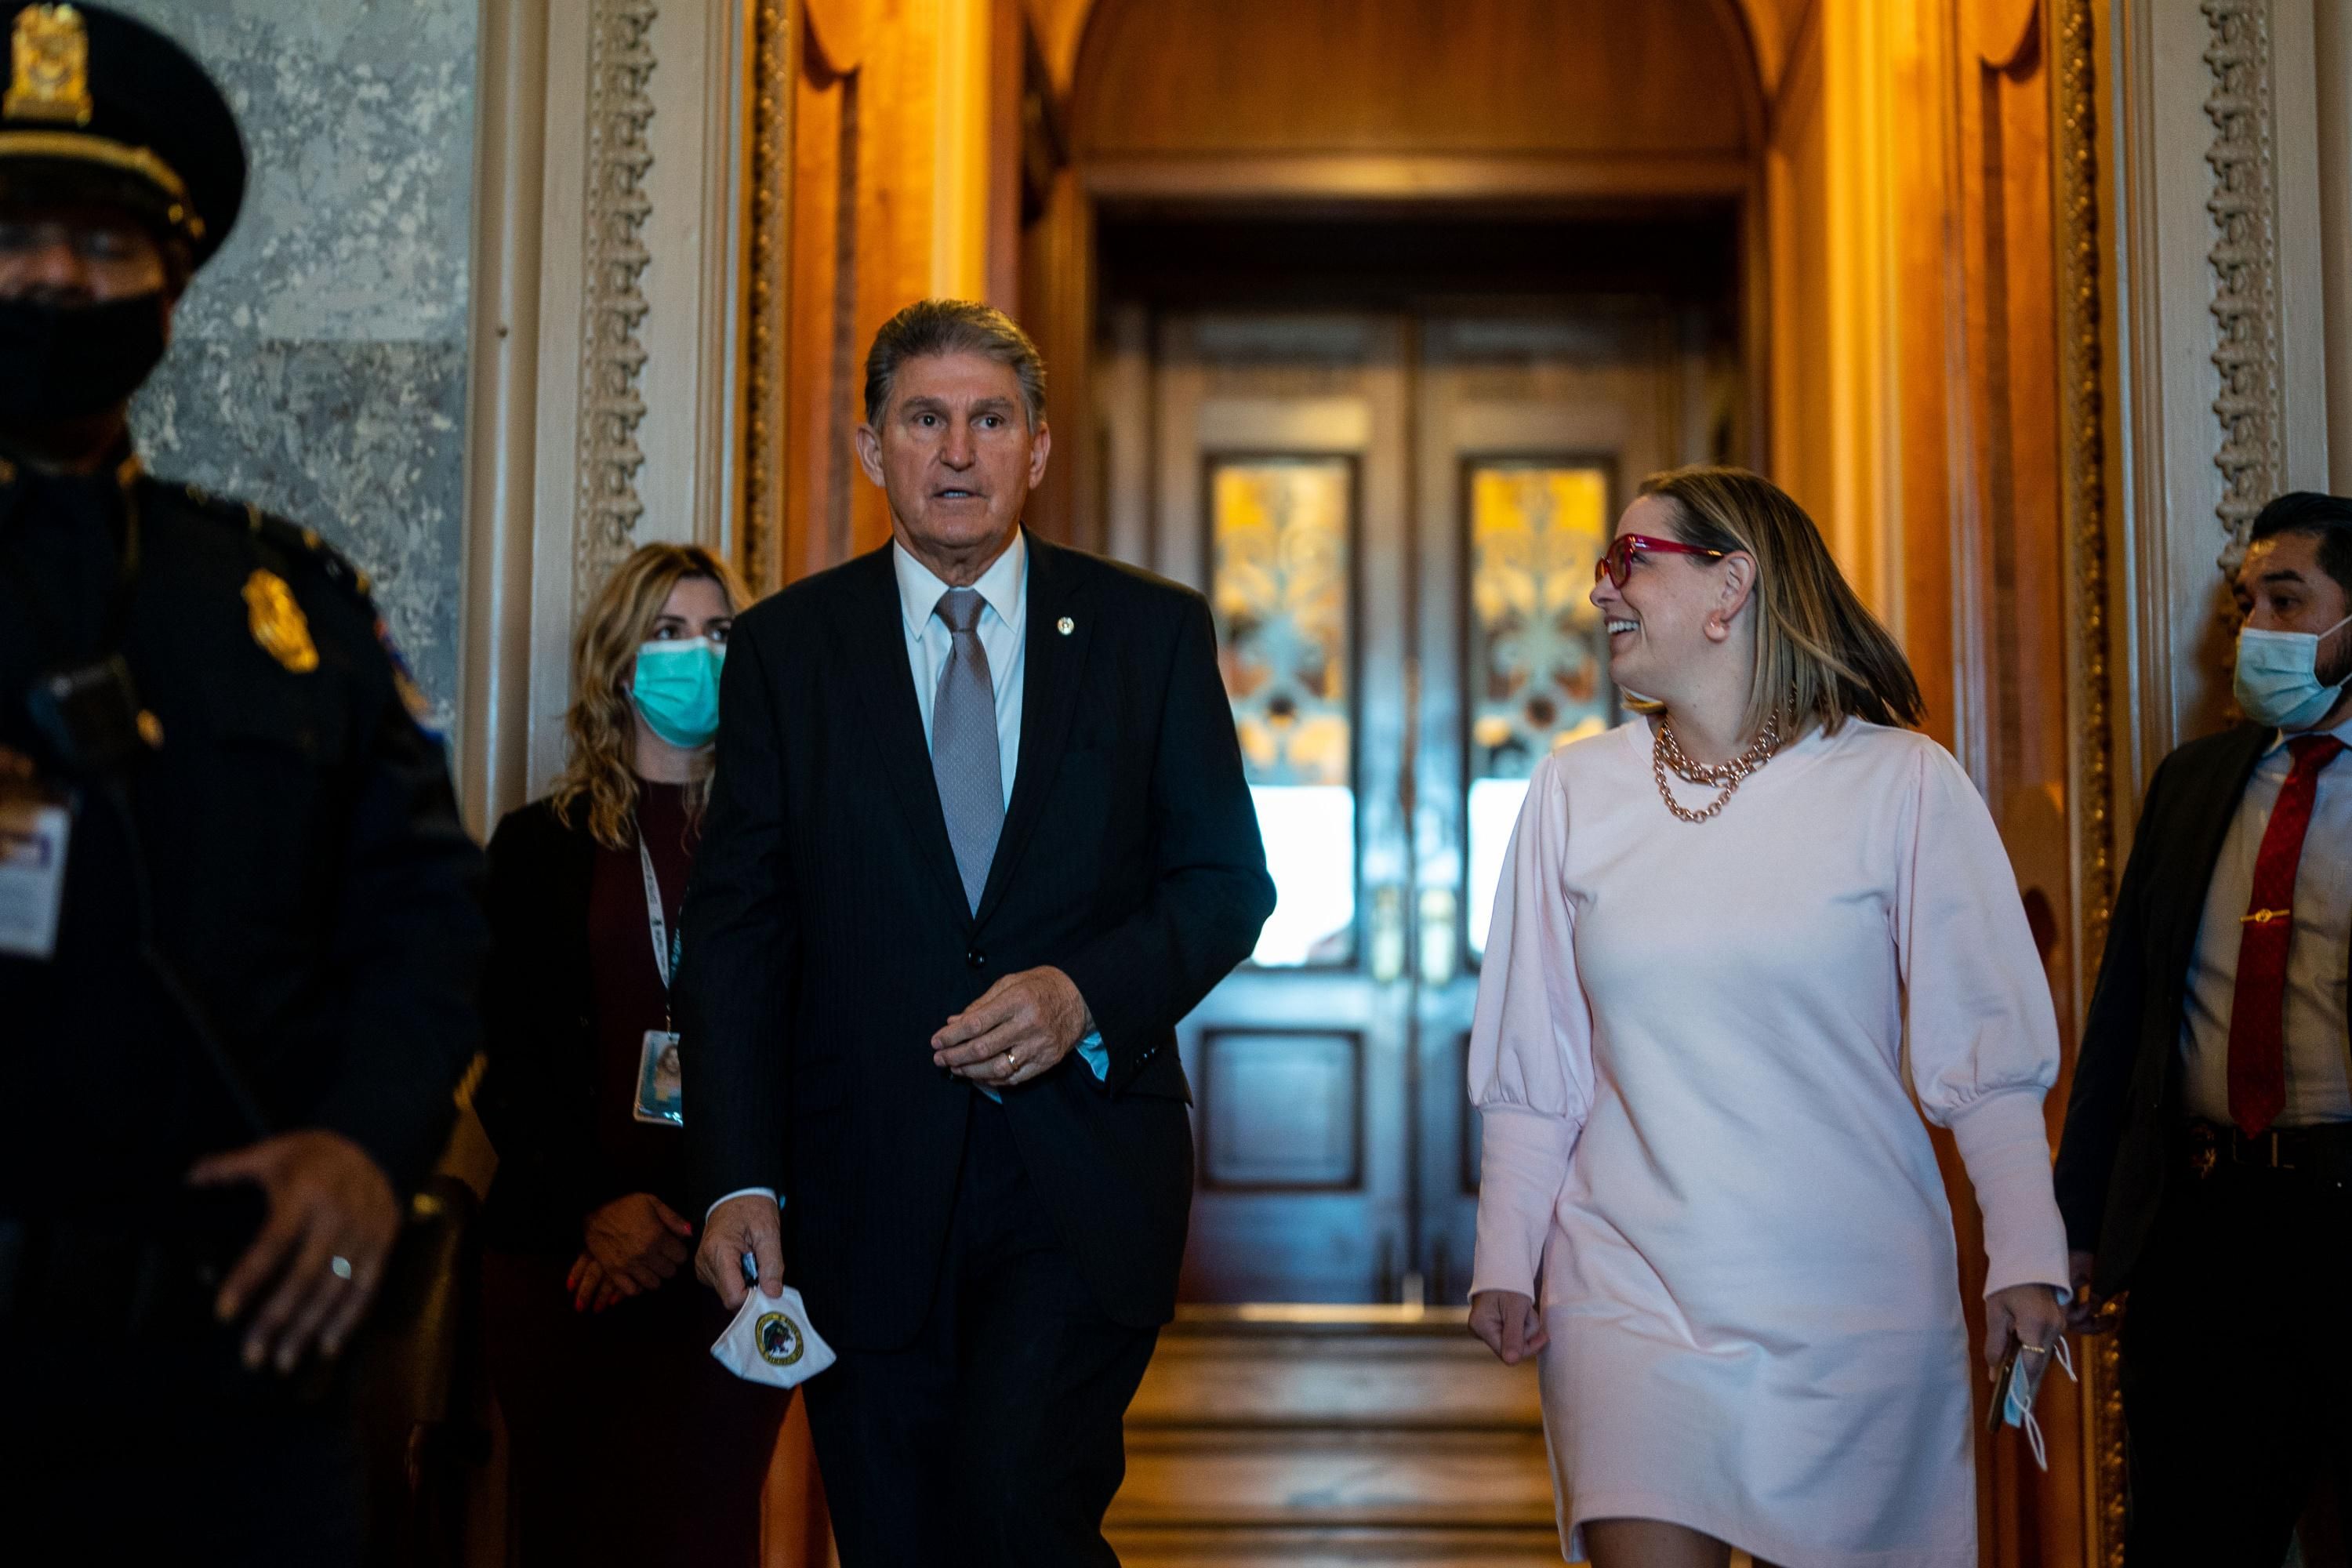 Sens. Joe Manchin and Kyrsten Sinema walk in the Senate hallway